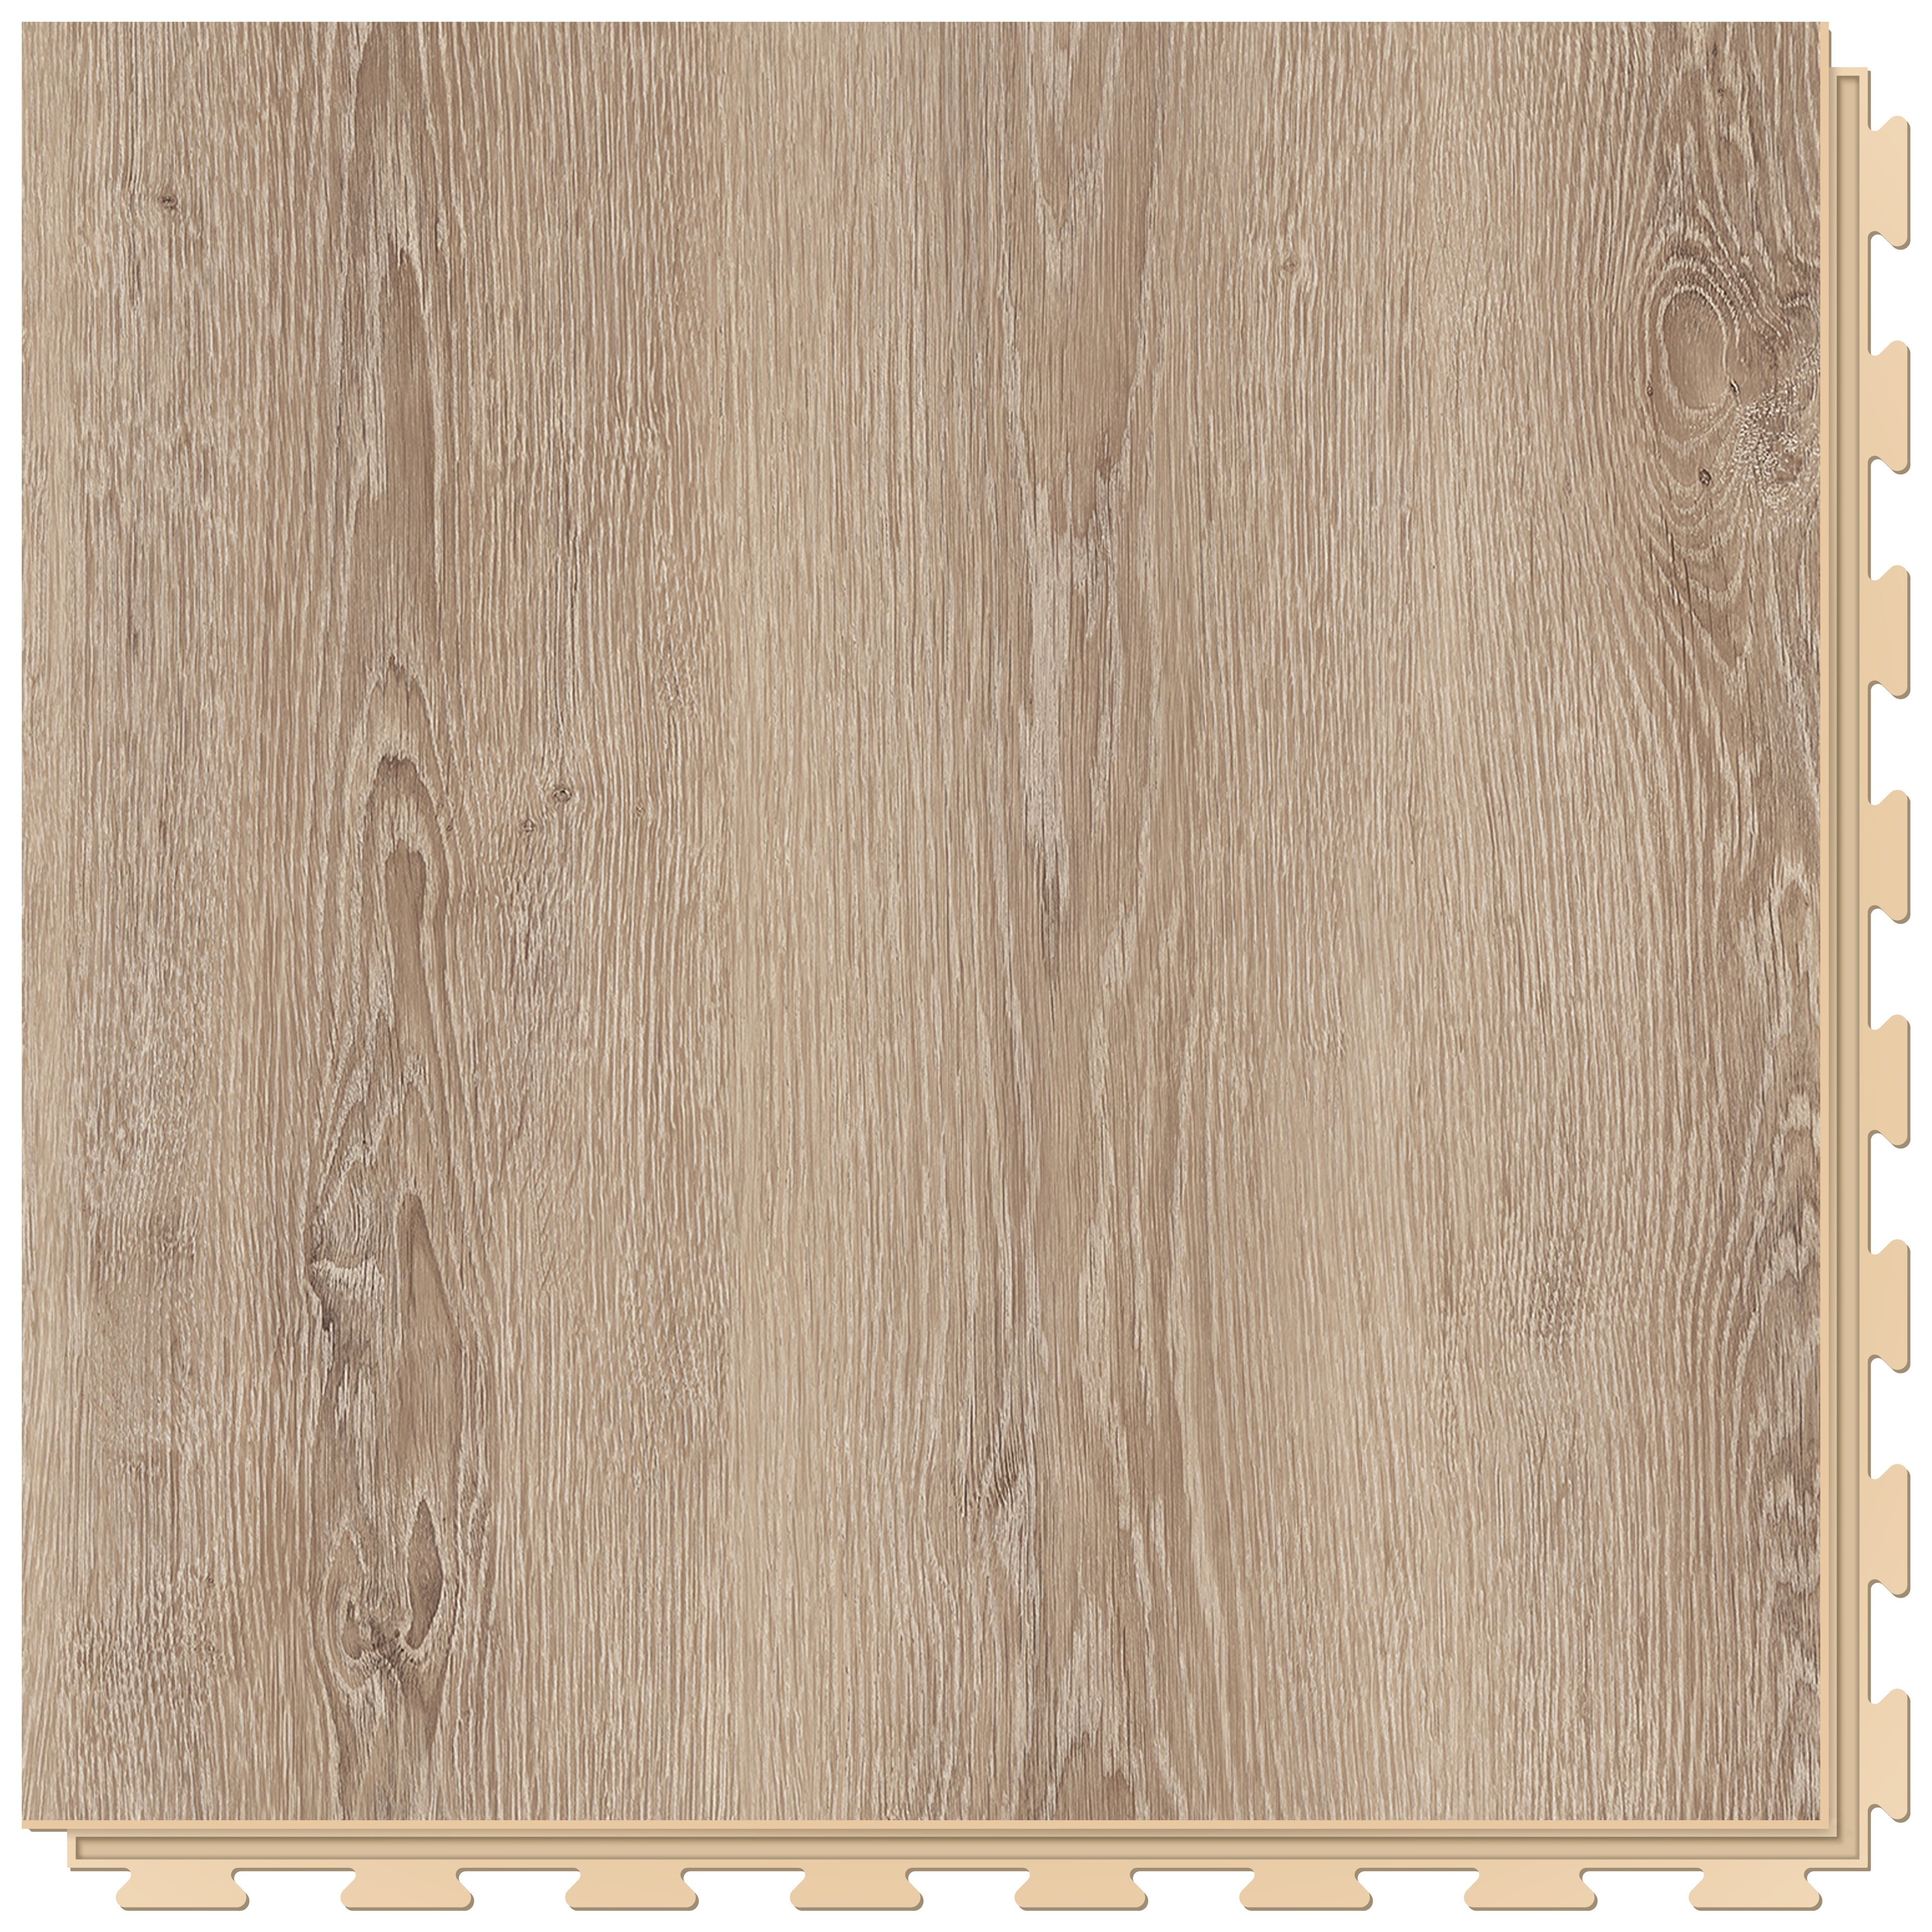 Hnědá vinylová PVC dlažba Fortelock Business Beige Tyrolean oak W001 - délka 66,8 cm, šířka 66,8 cm, výška 0,7 cm